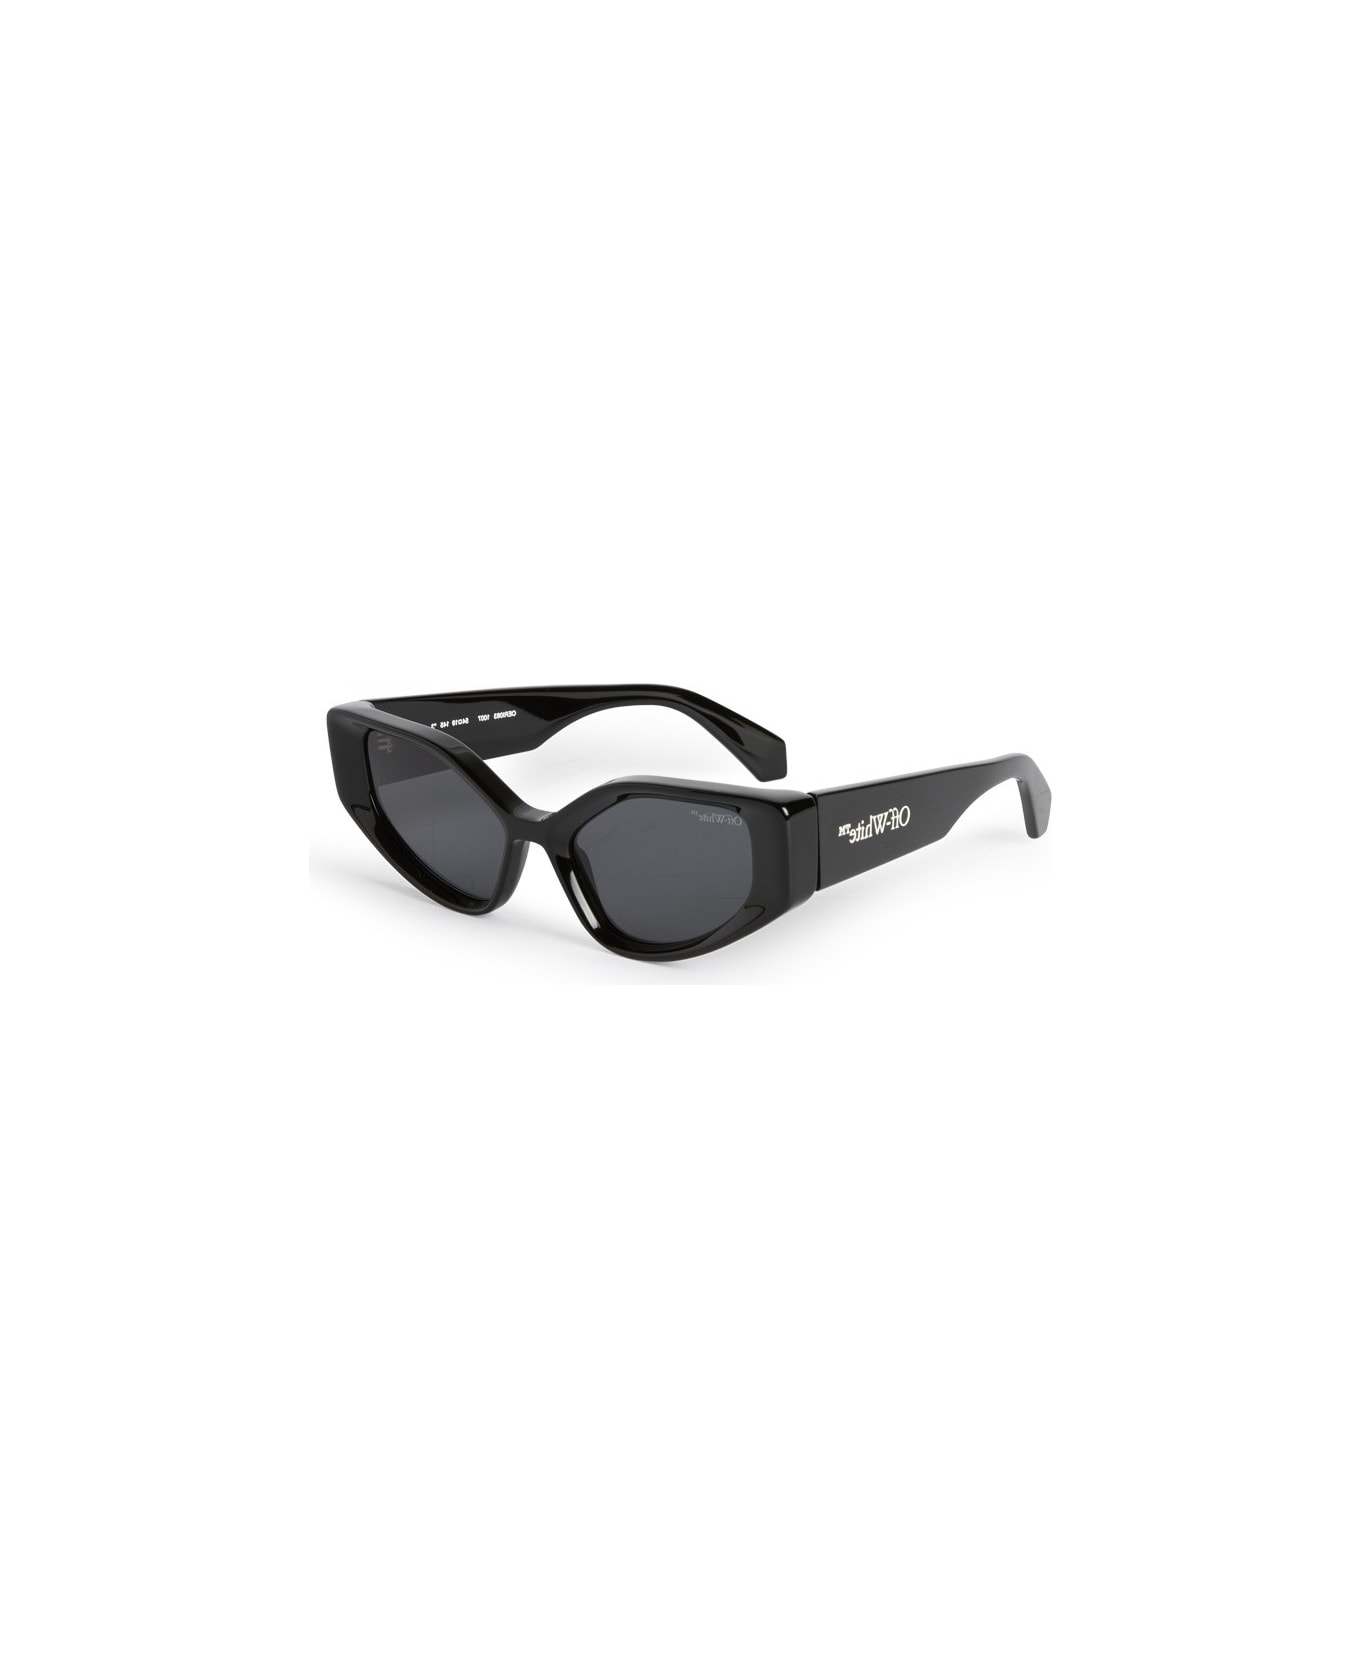 Off-White MEMPHIS SUNGLASSES Sunglasses - Black サングラス